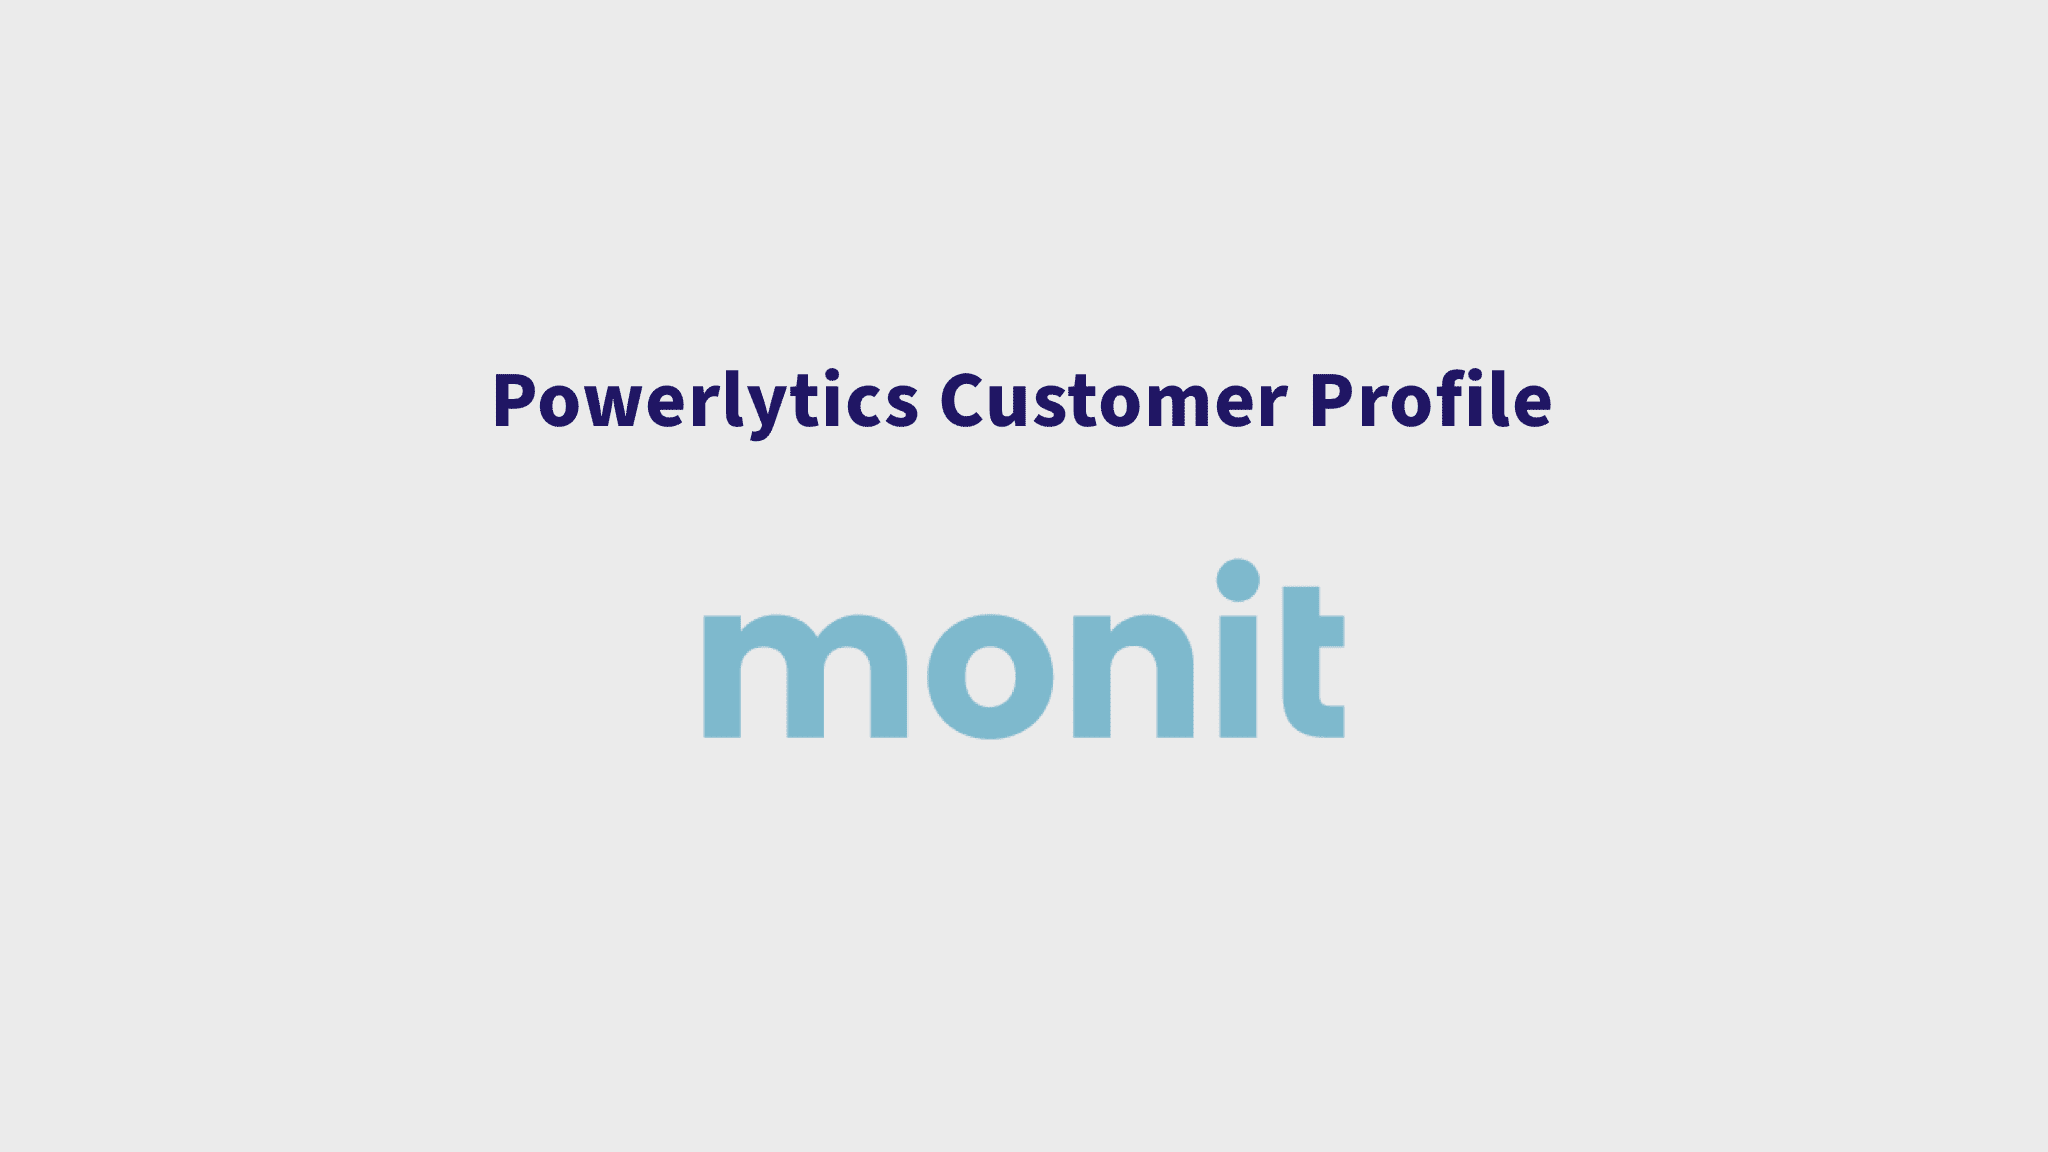 Powerlytics customer profile monit